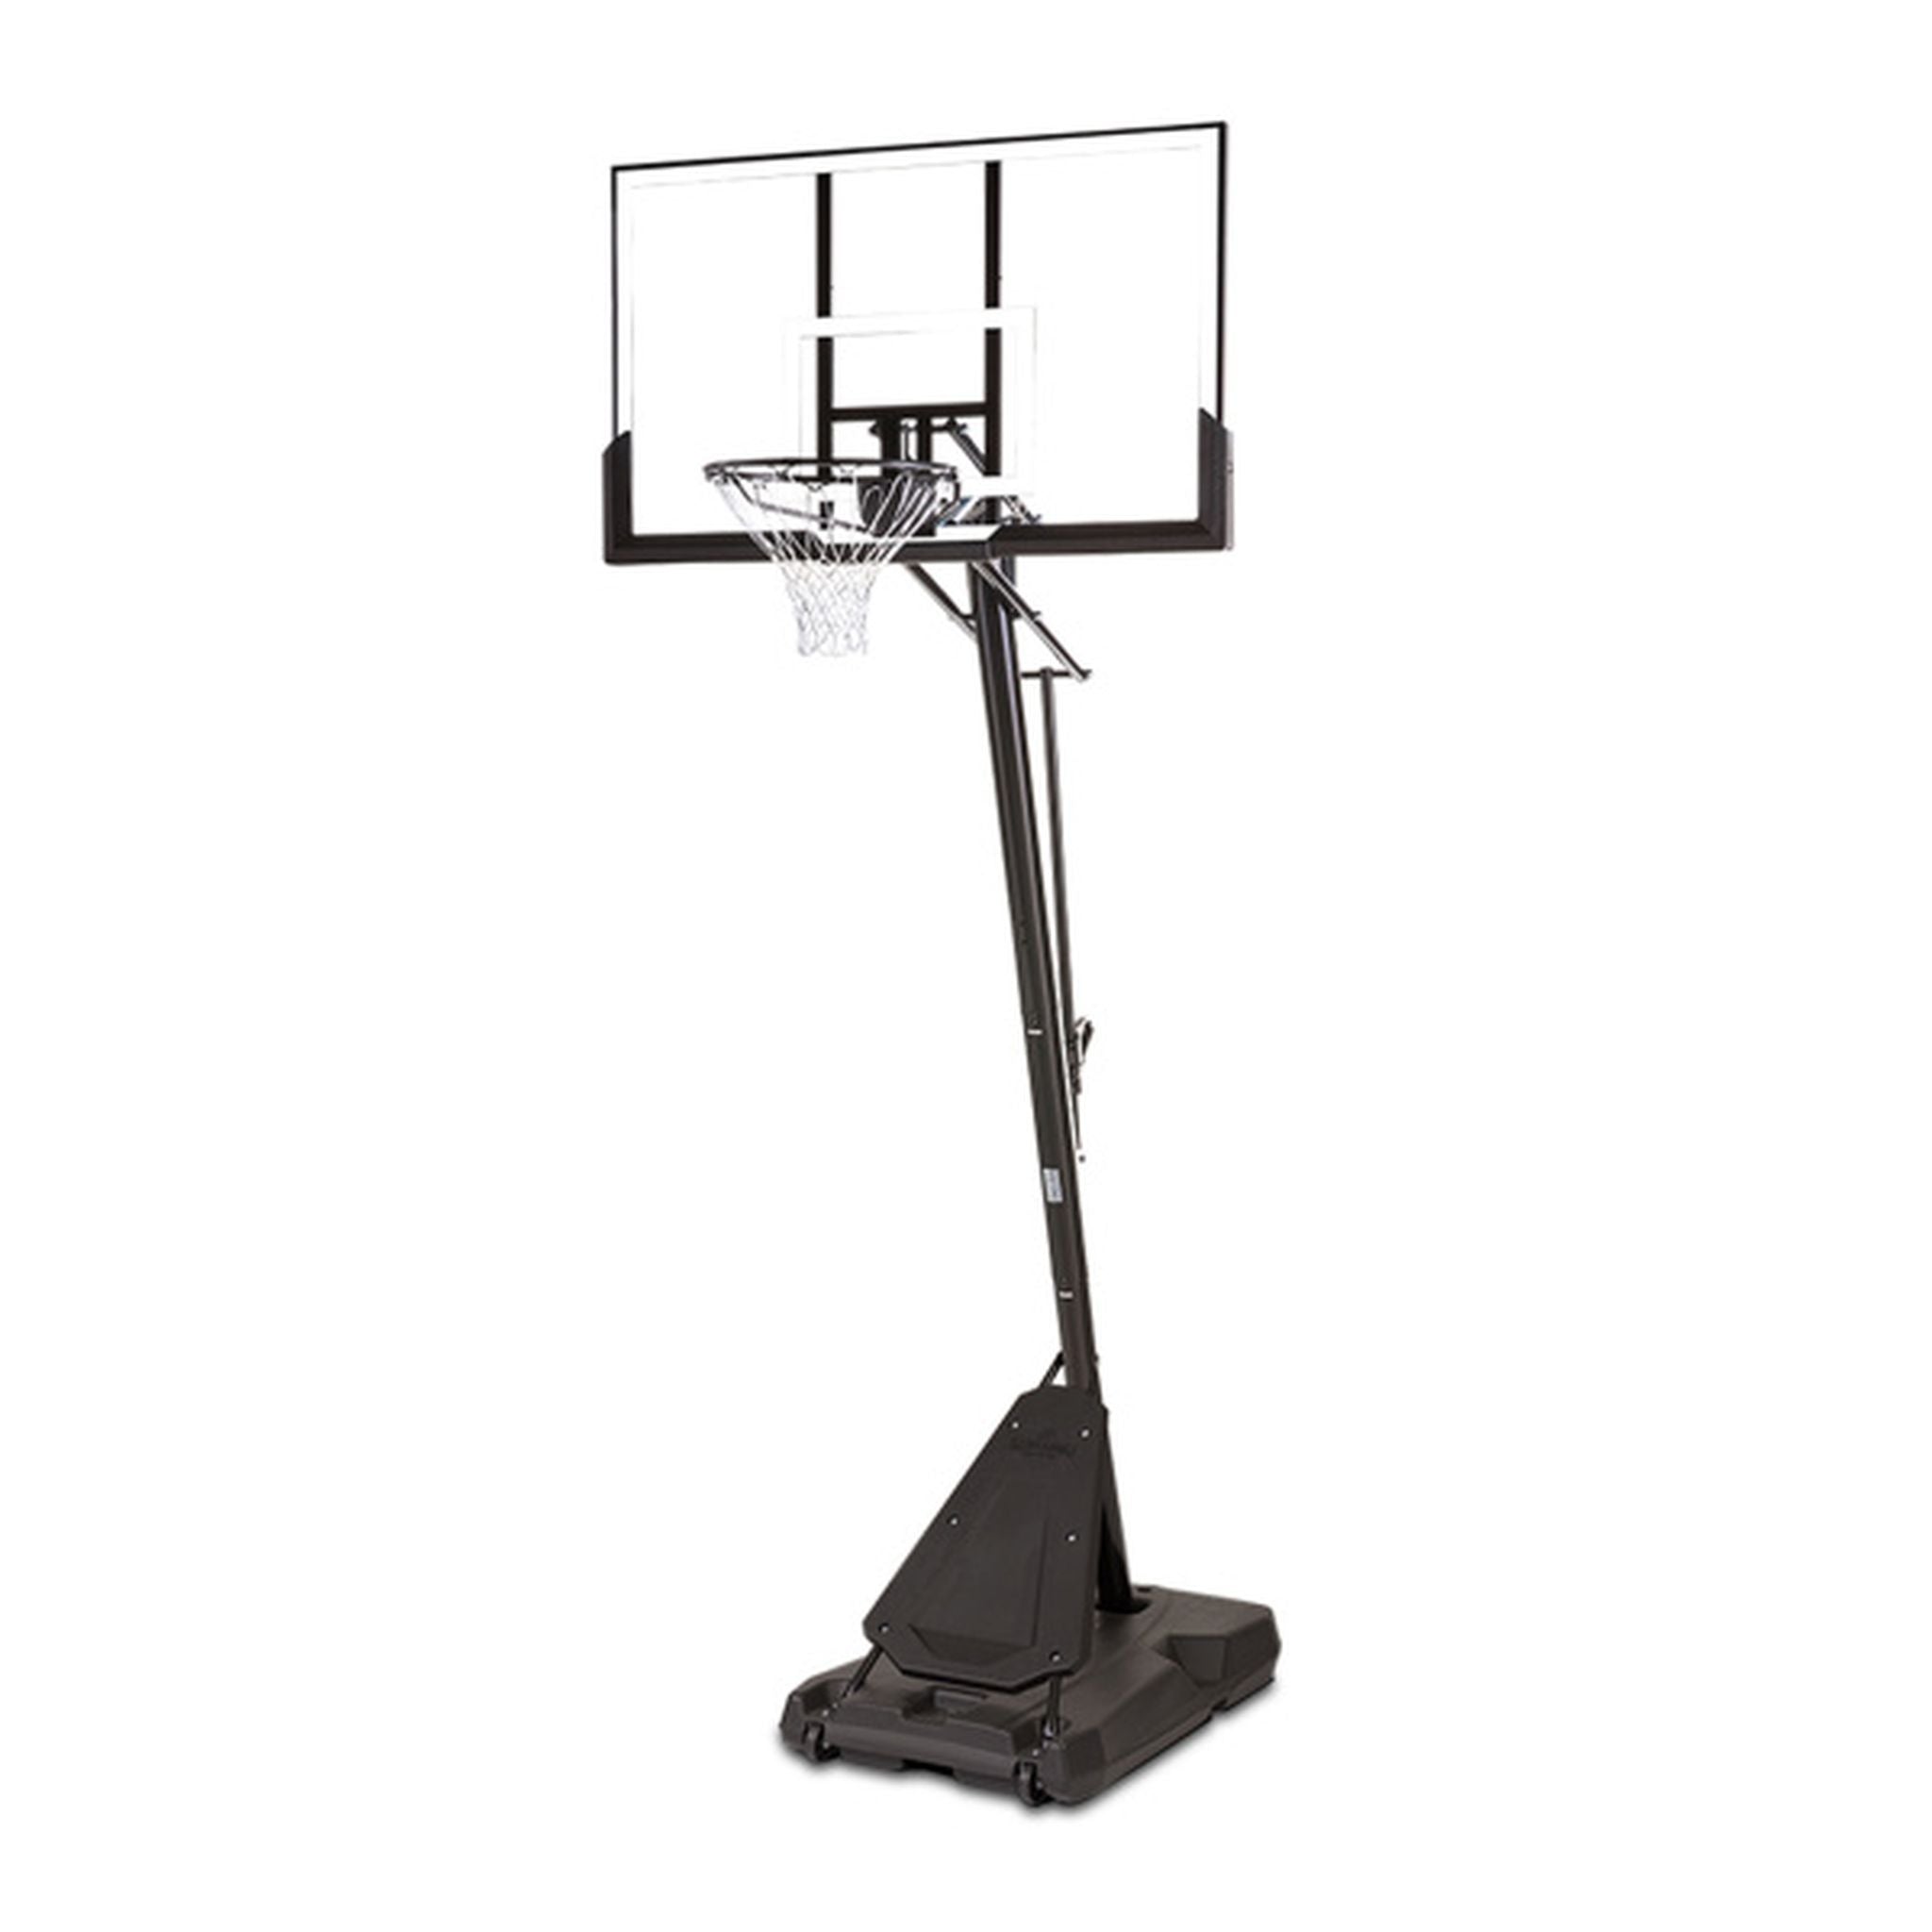 Spalding 48-inch Platinum Acrylic Portable Basketball System